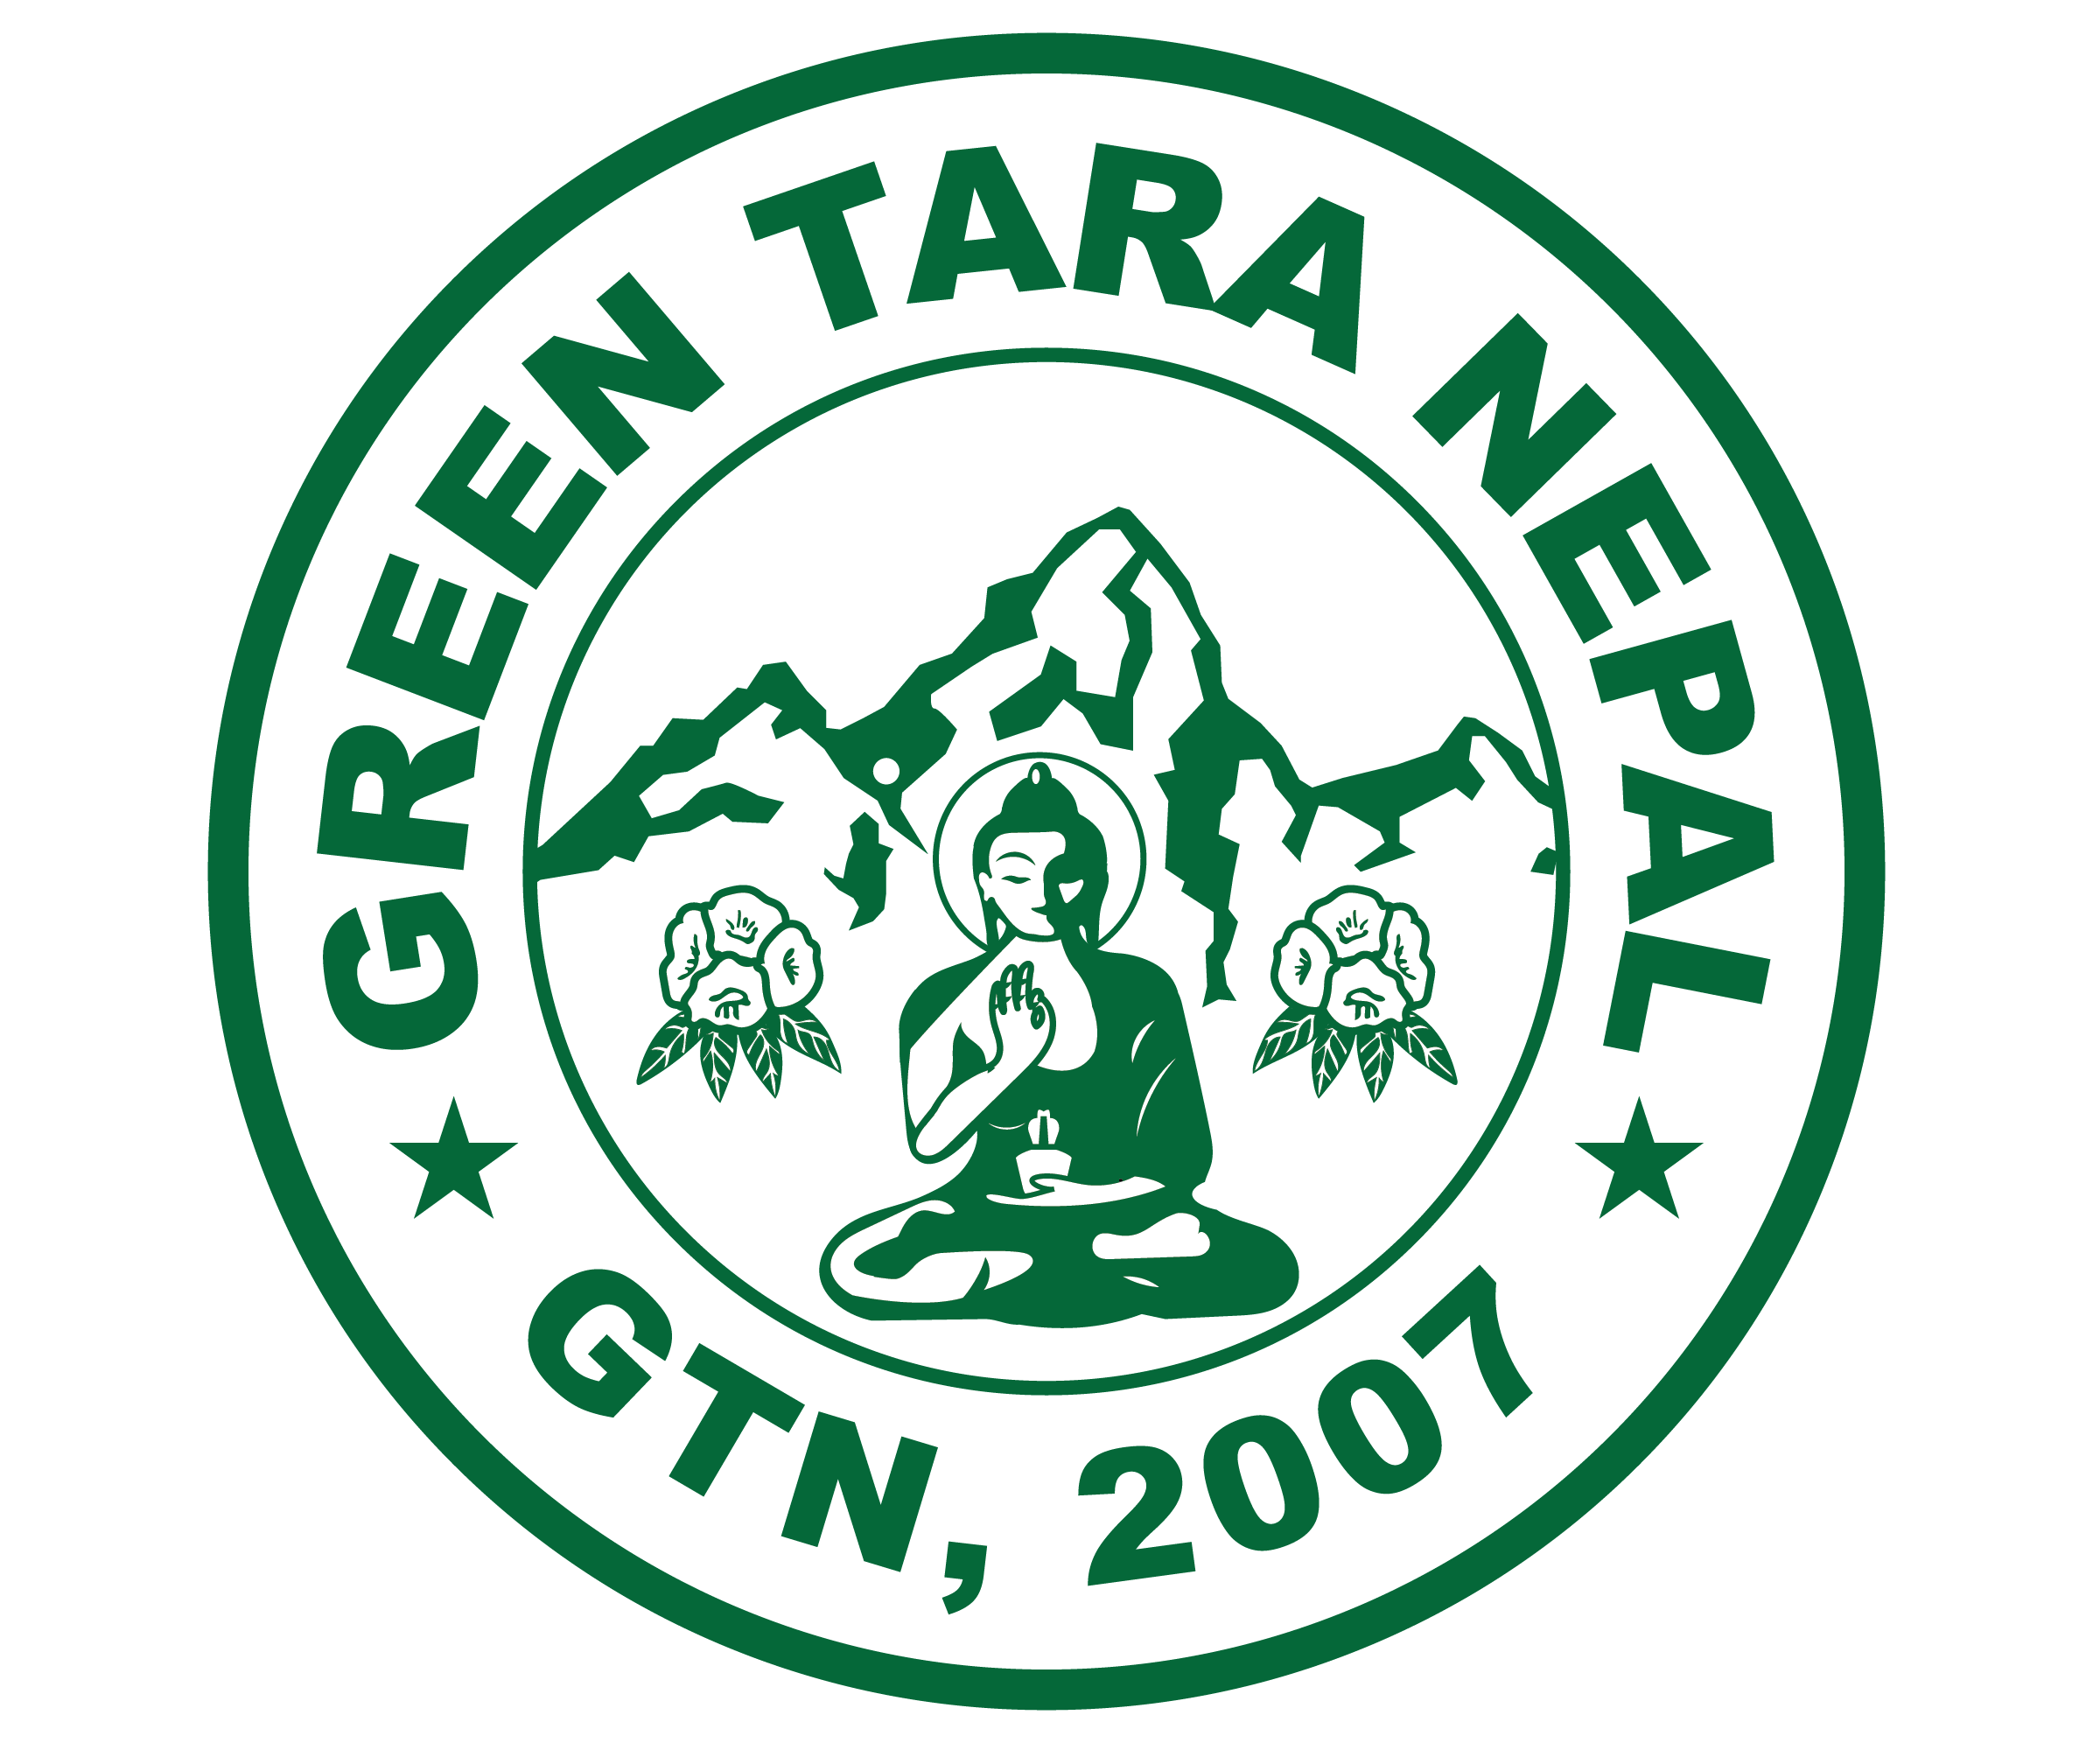 Green Tara Nepal